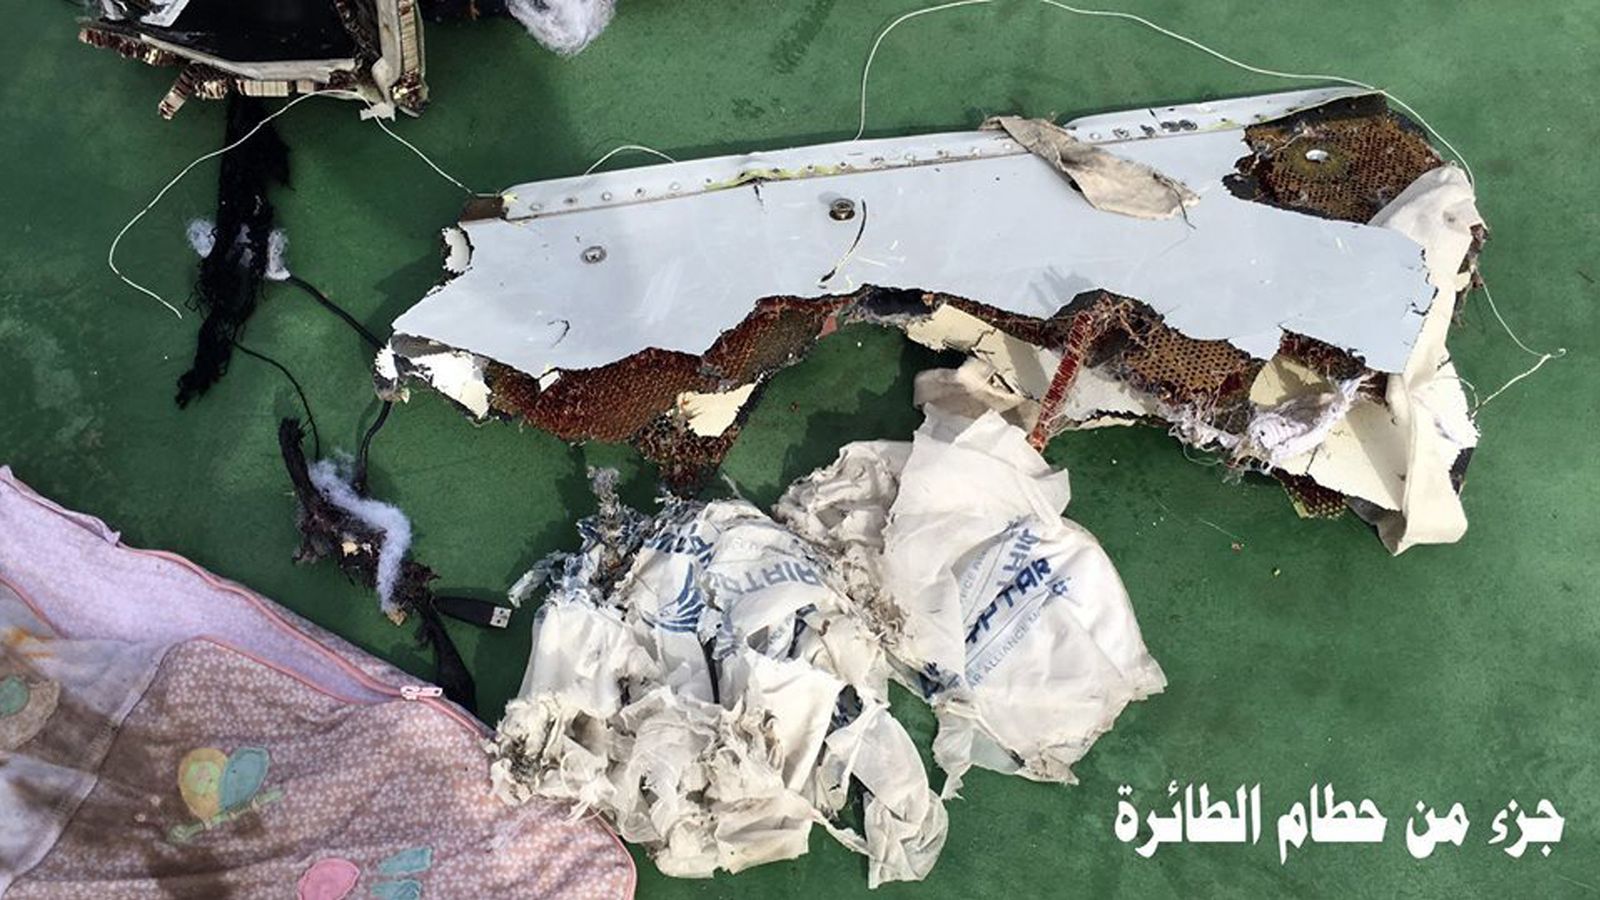 Cigarette in cockpit caused EgyptAir passenger jet to crash, killing all on board, investigation finds